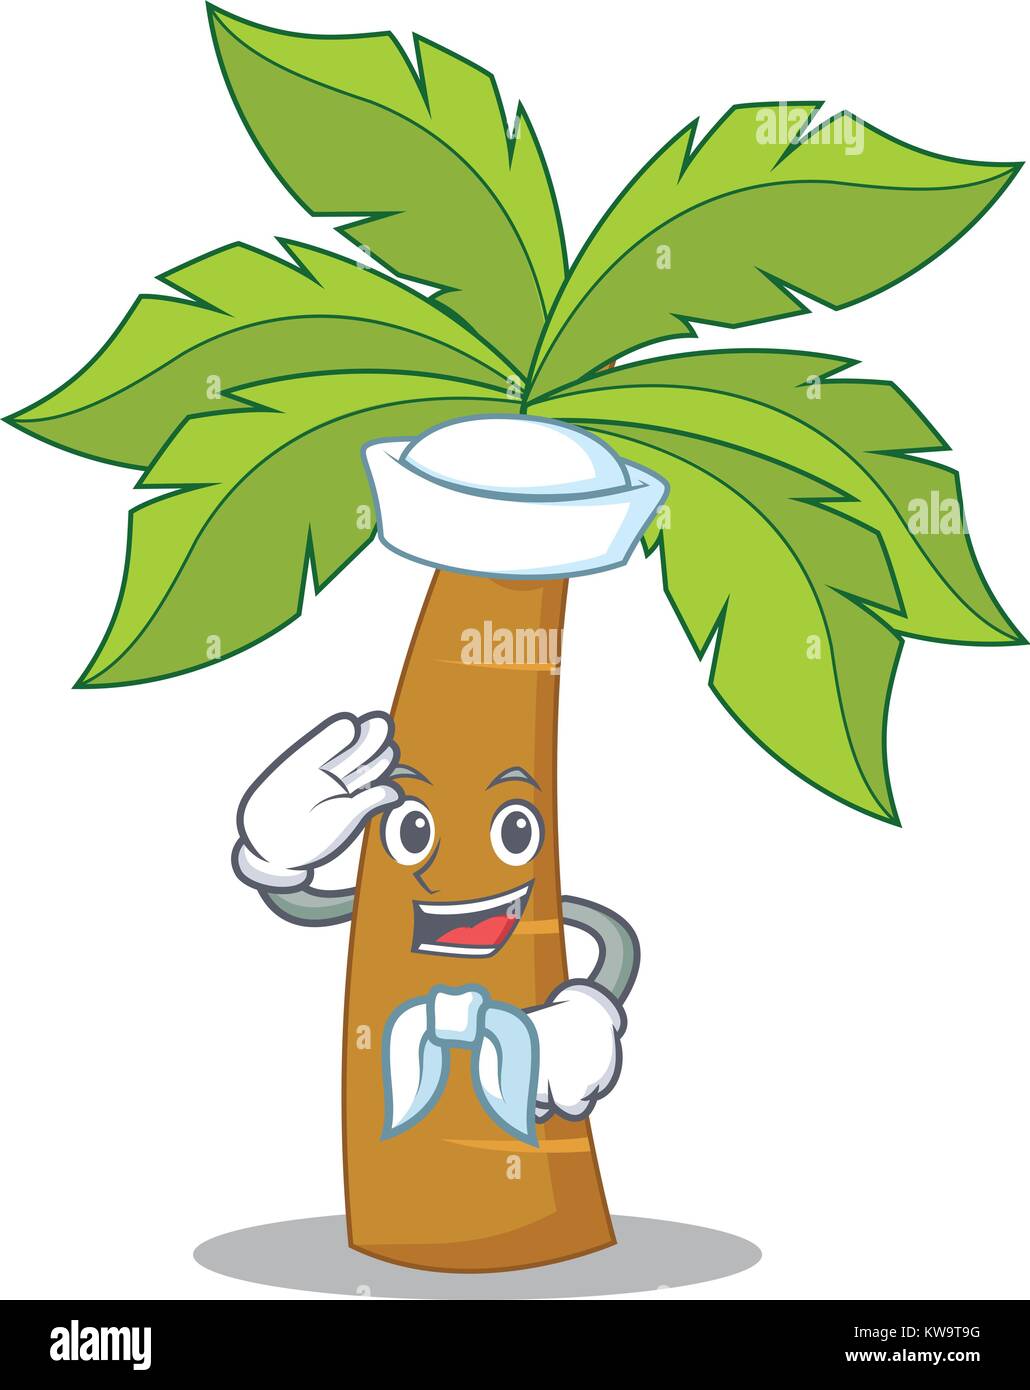 Sailor palm tree character cartoon Stock Vector